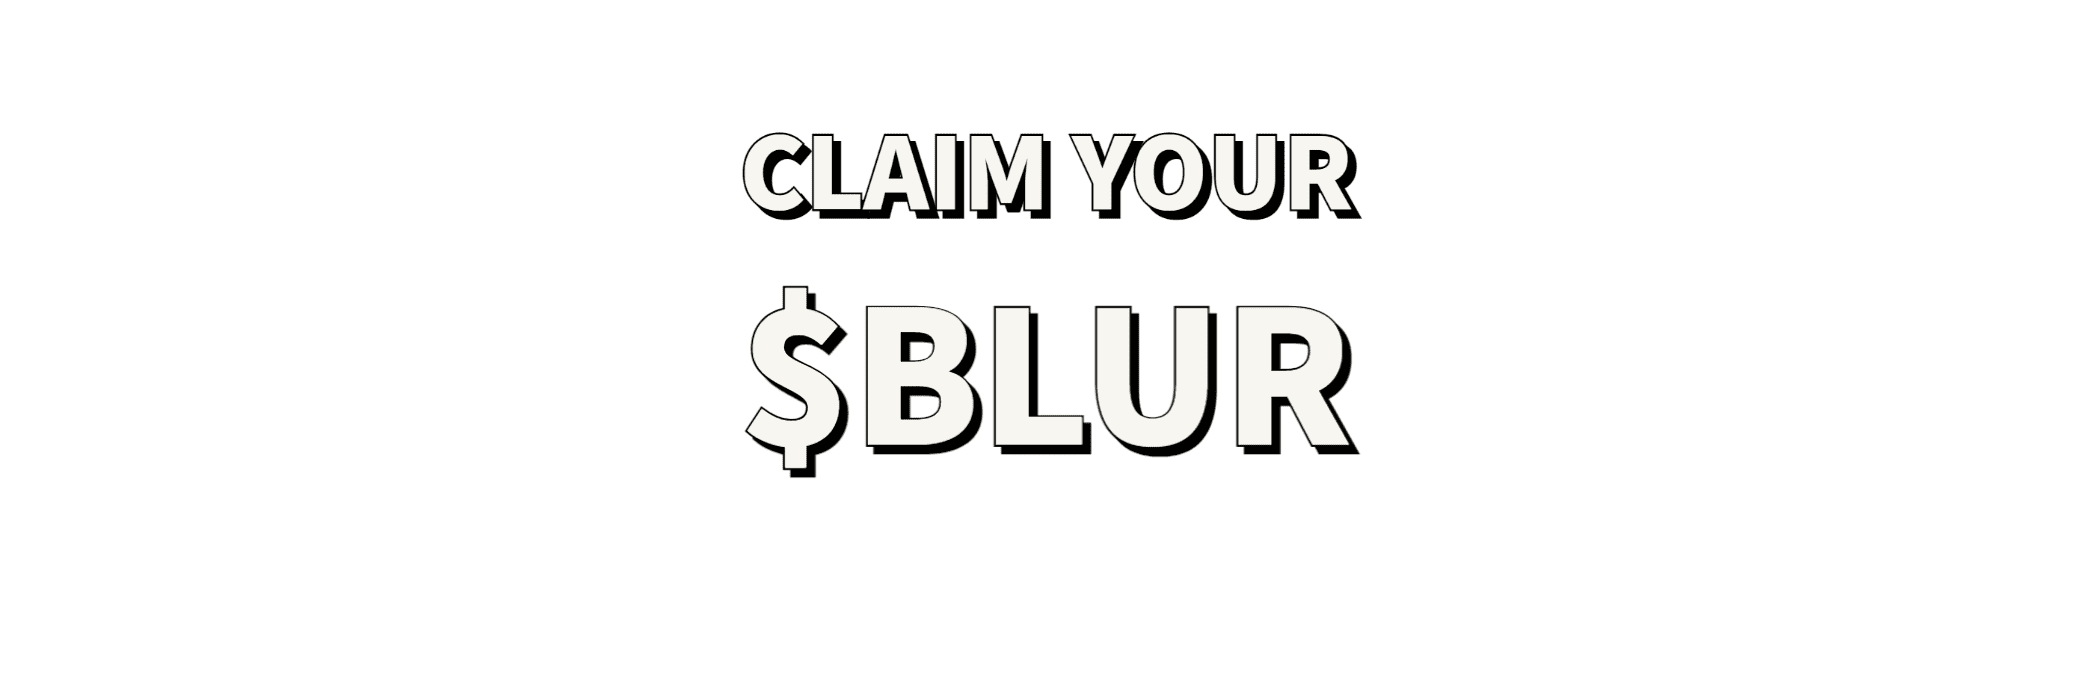 $BLUR Stimulus is here